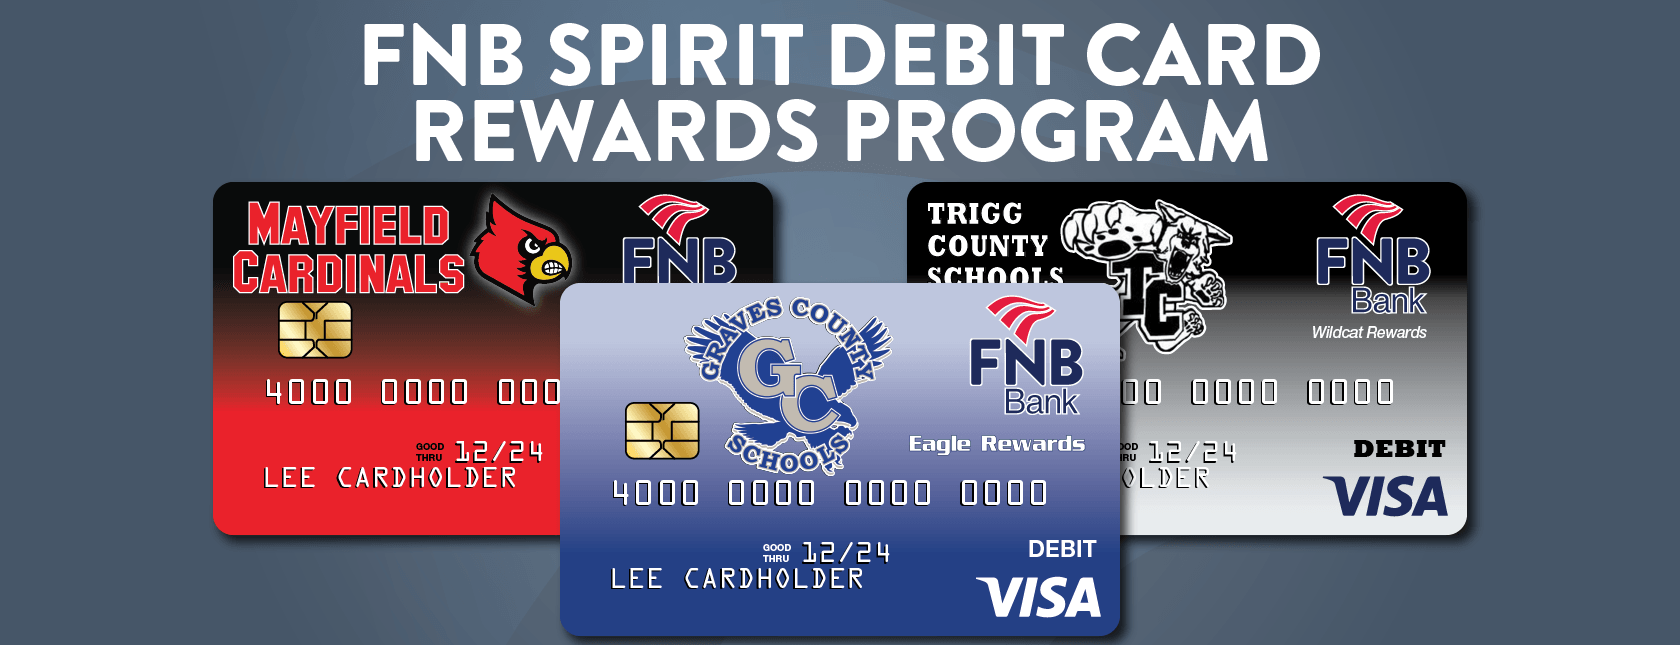 Spirit Debit Card Reward Program - Mayfield, Graves and Trigg County Cards